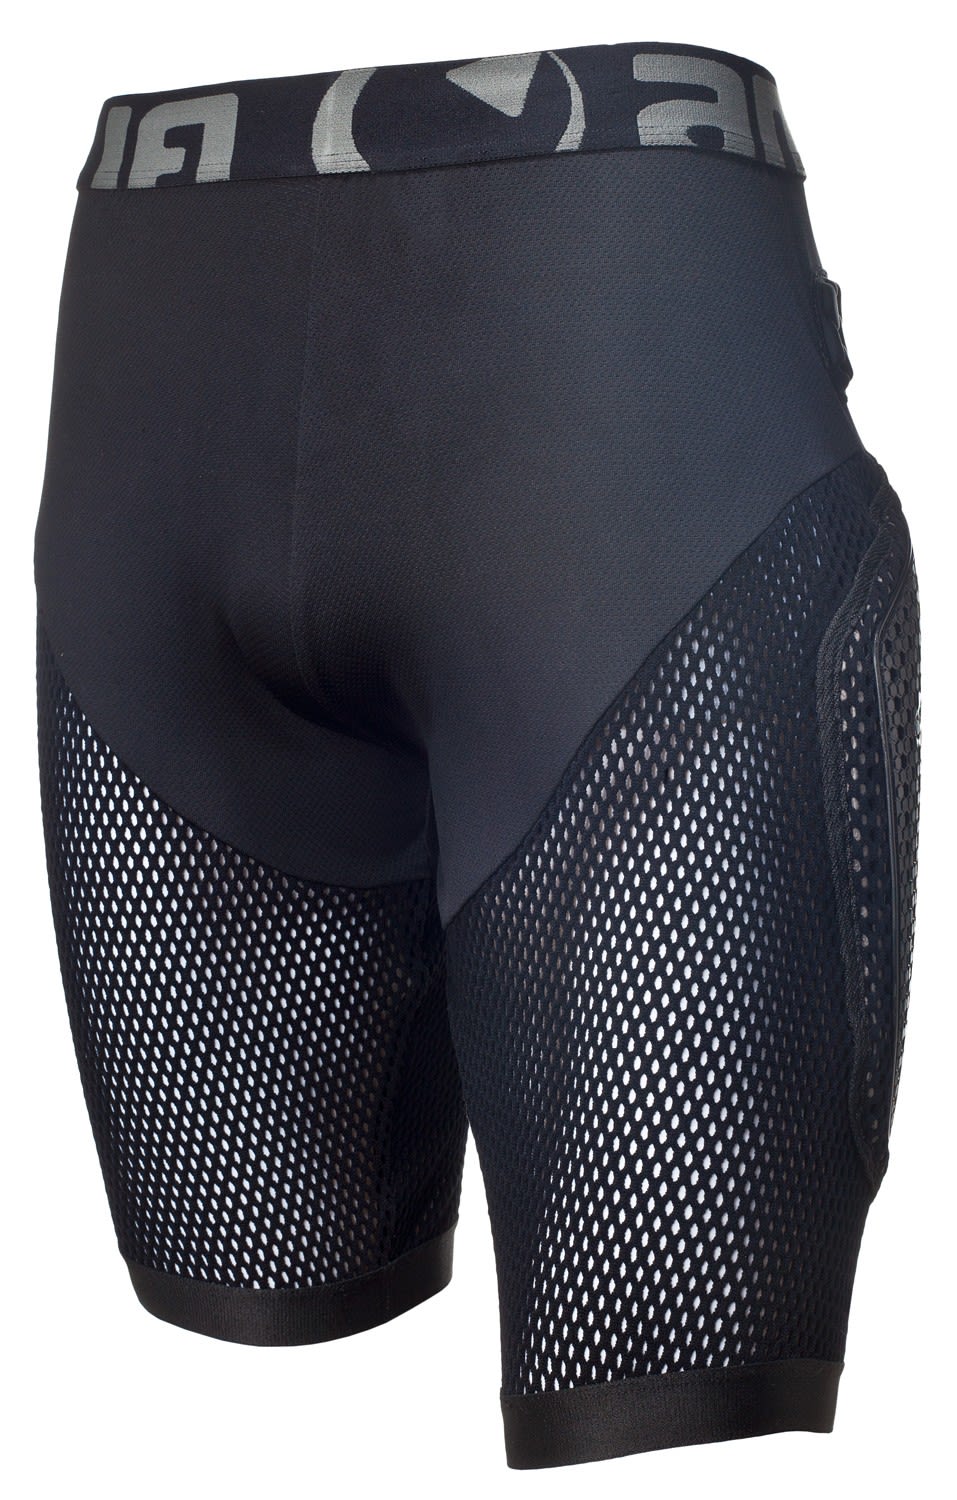 Amplifi Fuse Pants Schwarz- Protektorenhosen- Grsse S - Farbe Black unter Amplifi